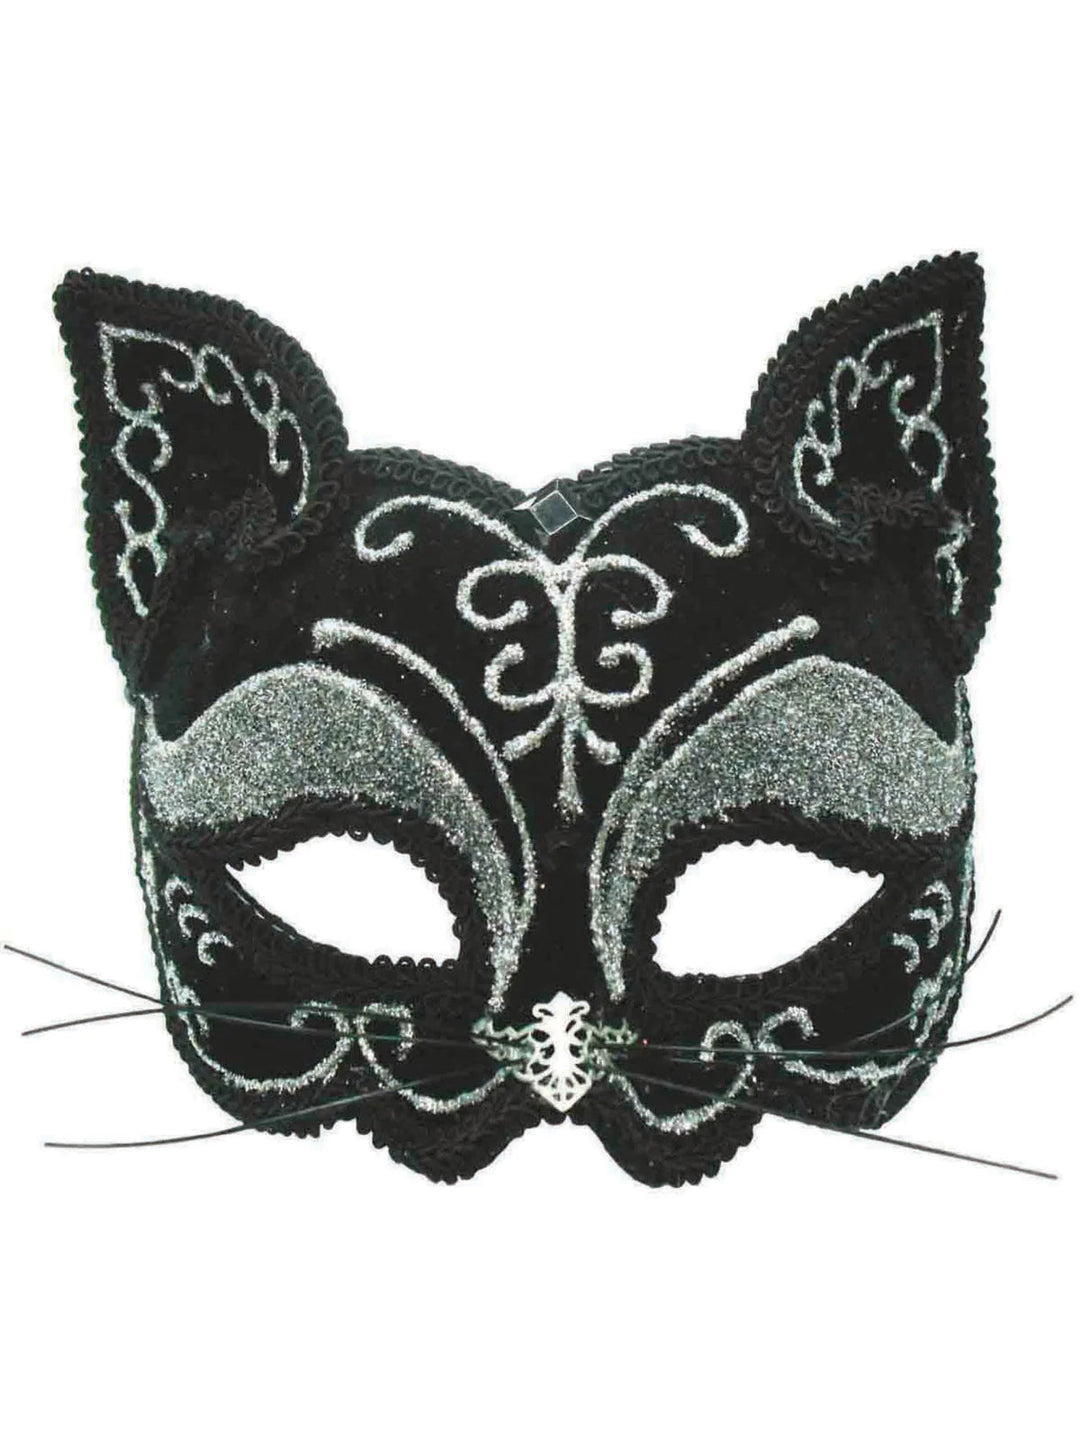 Black Cat Mask Decorative Masquerade Feline_1